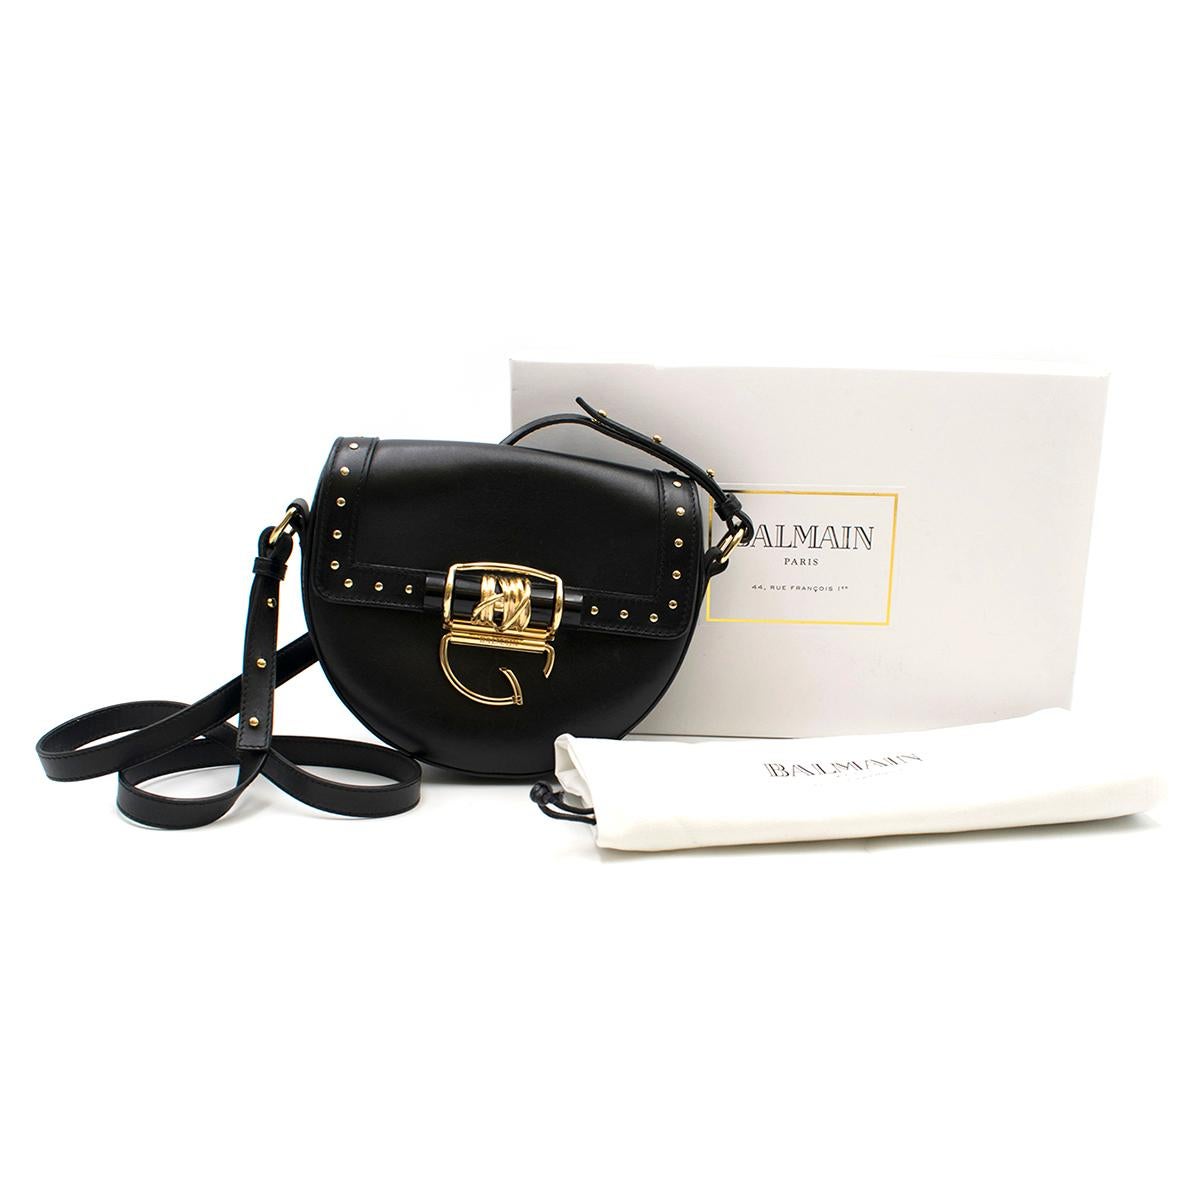 Balmain 44-18 Glove Black Leather Crossbody Bag w/Studs For Sale 2